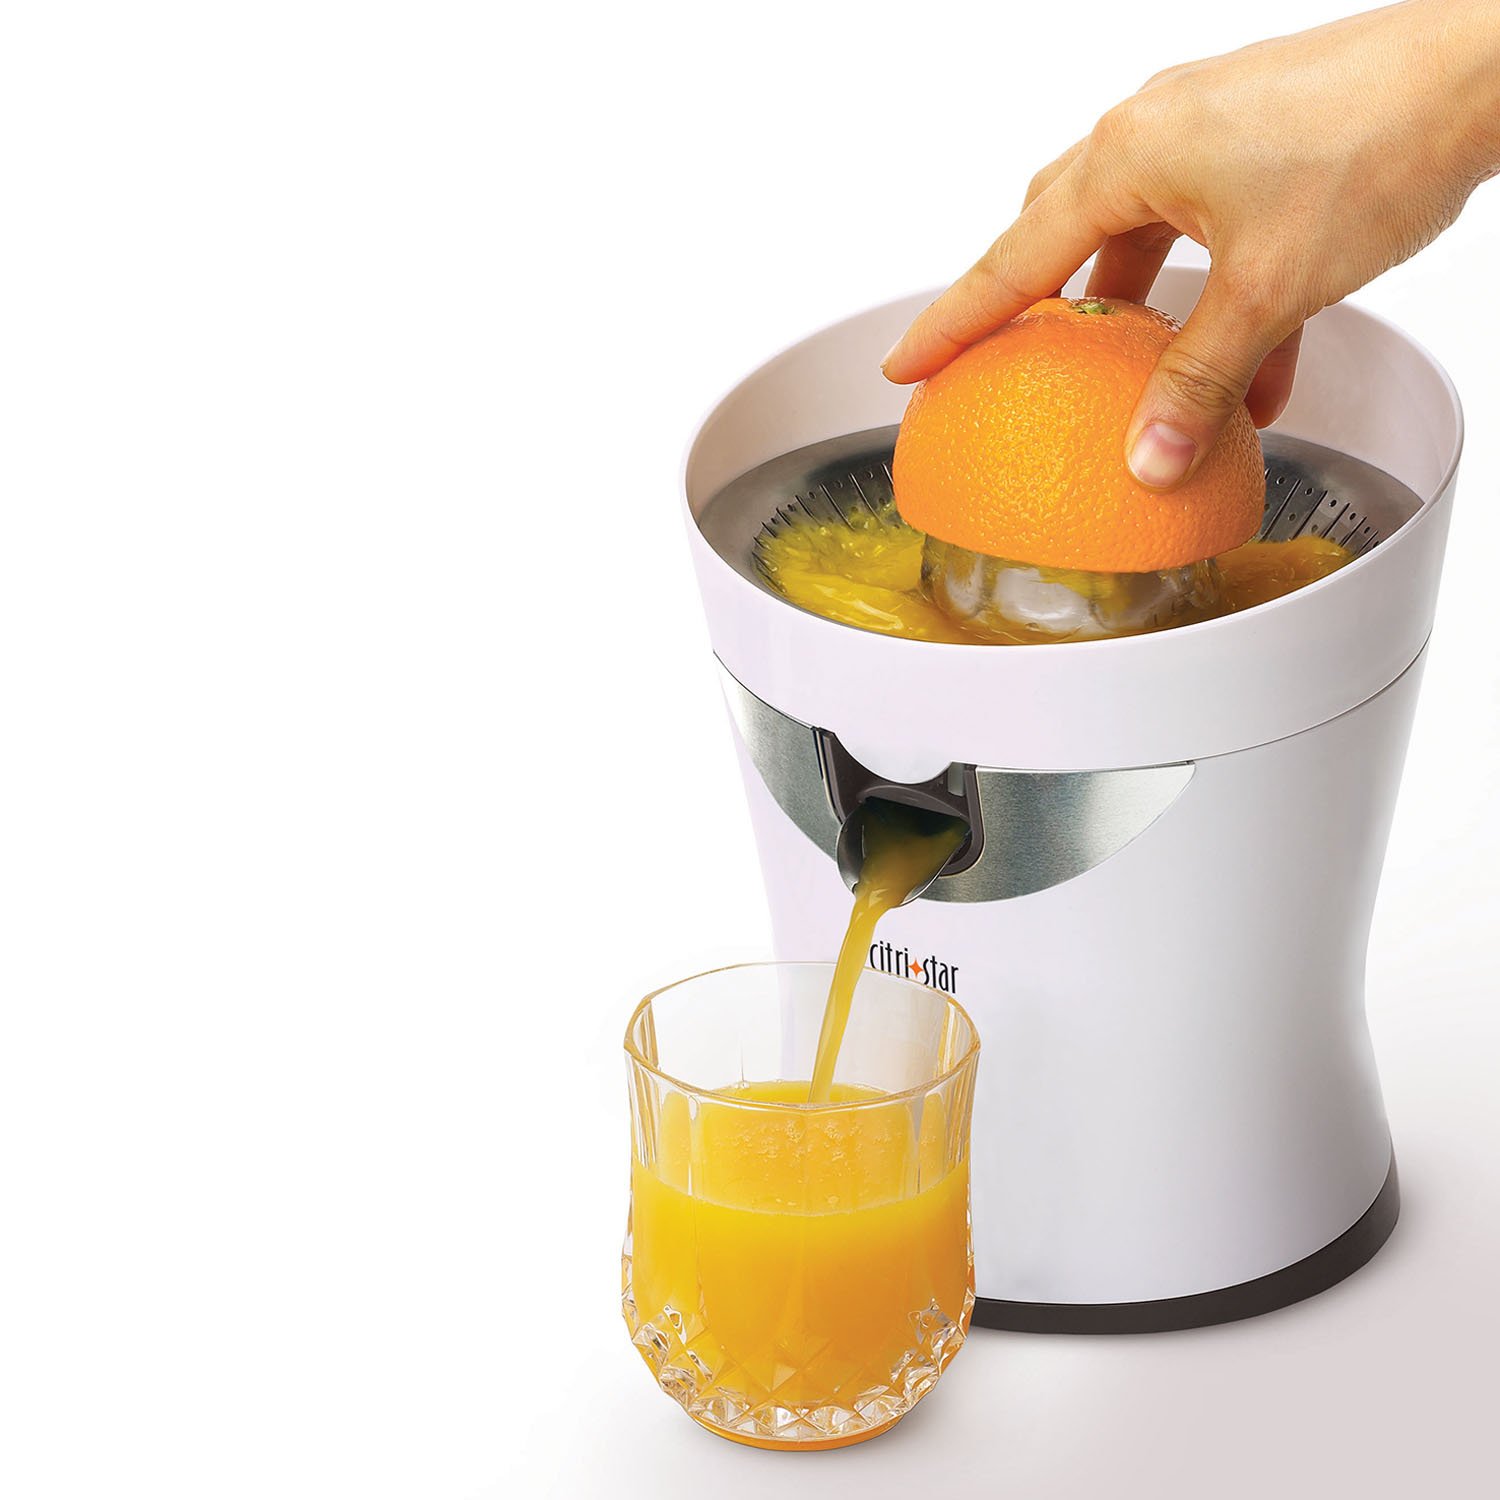 32oz. Citrus Juicer with Self-Reversing Cone